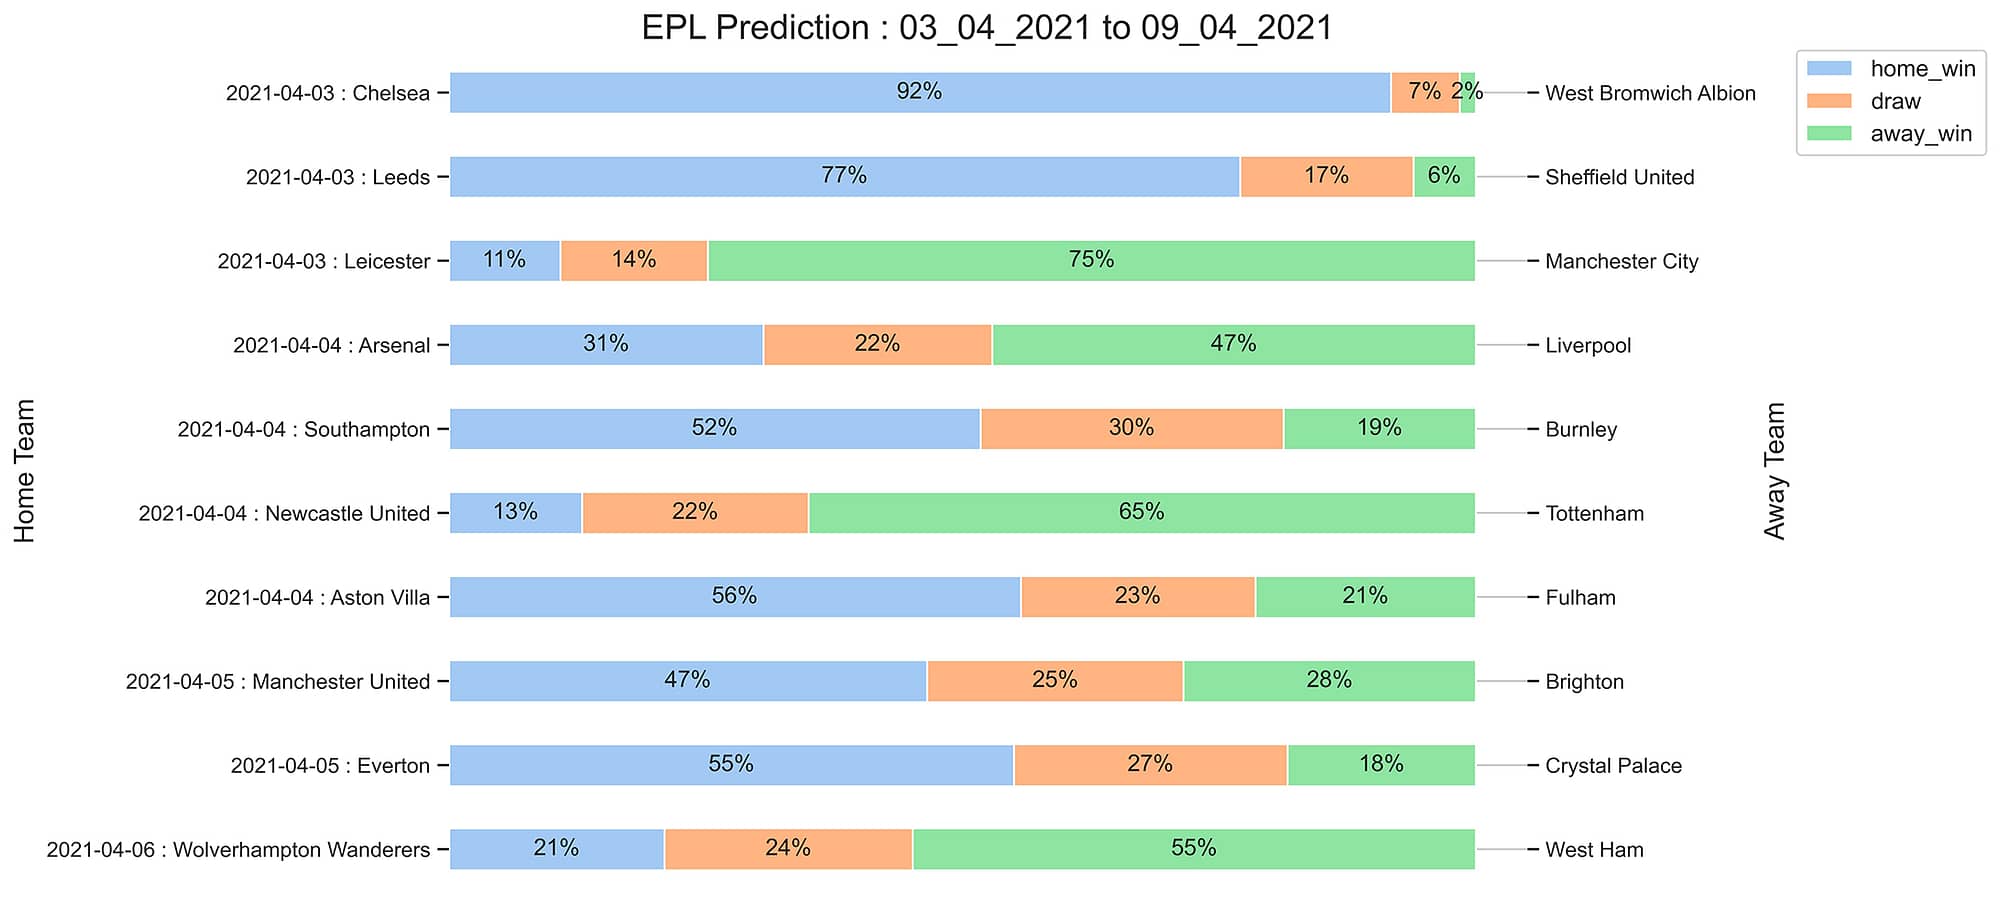 EPL_Prediction 03_04_2021